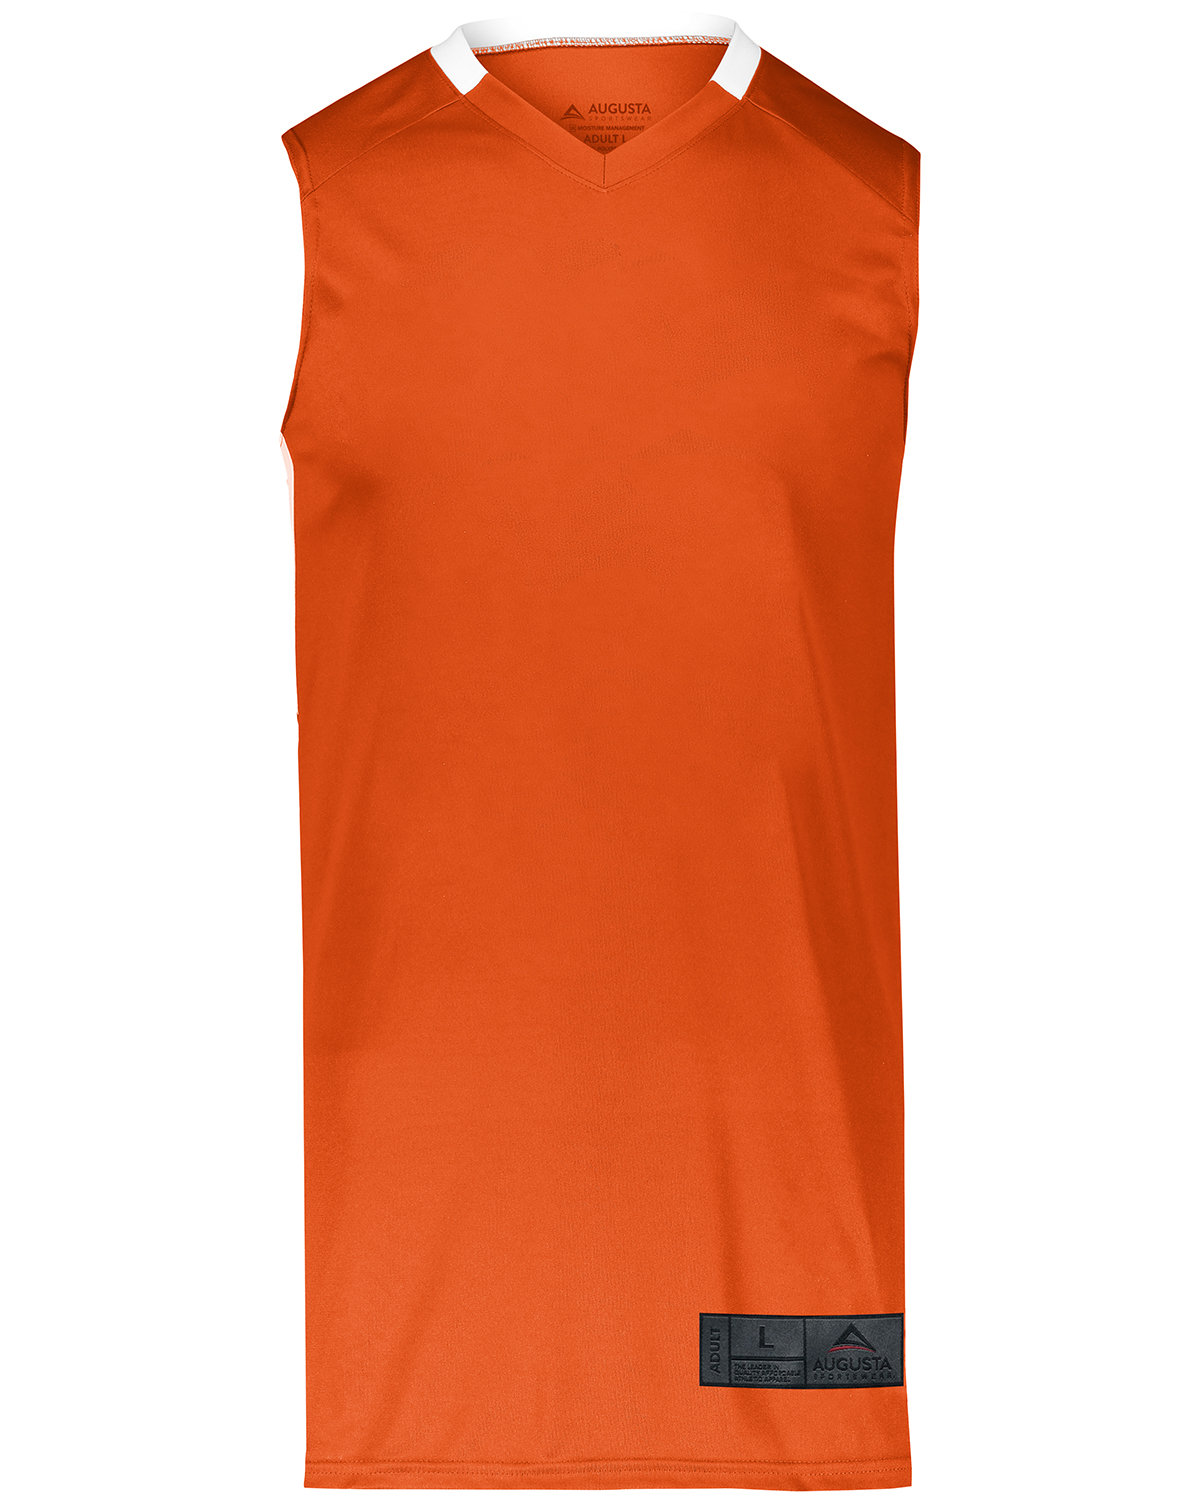 Augusta Swish Reversible Basketball Jersey, Orange/White / M